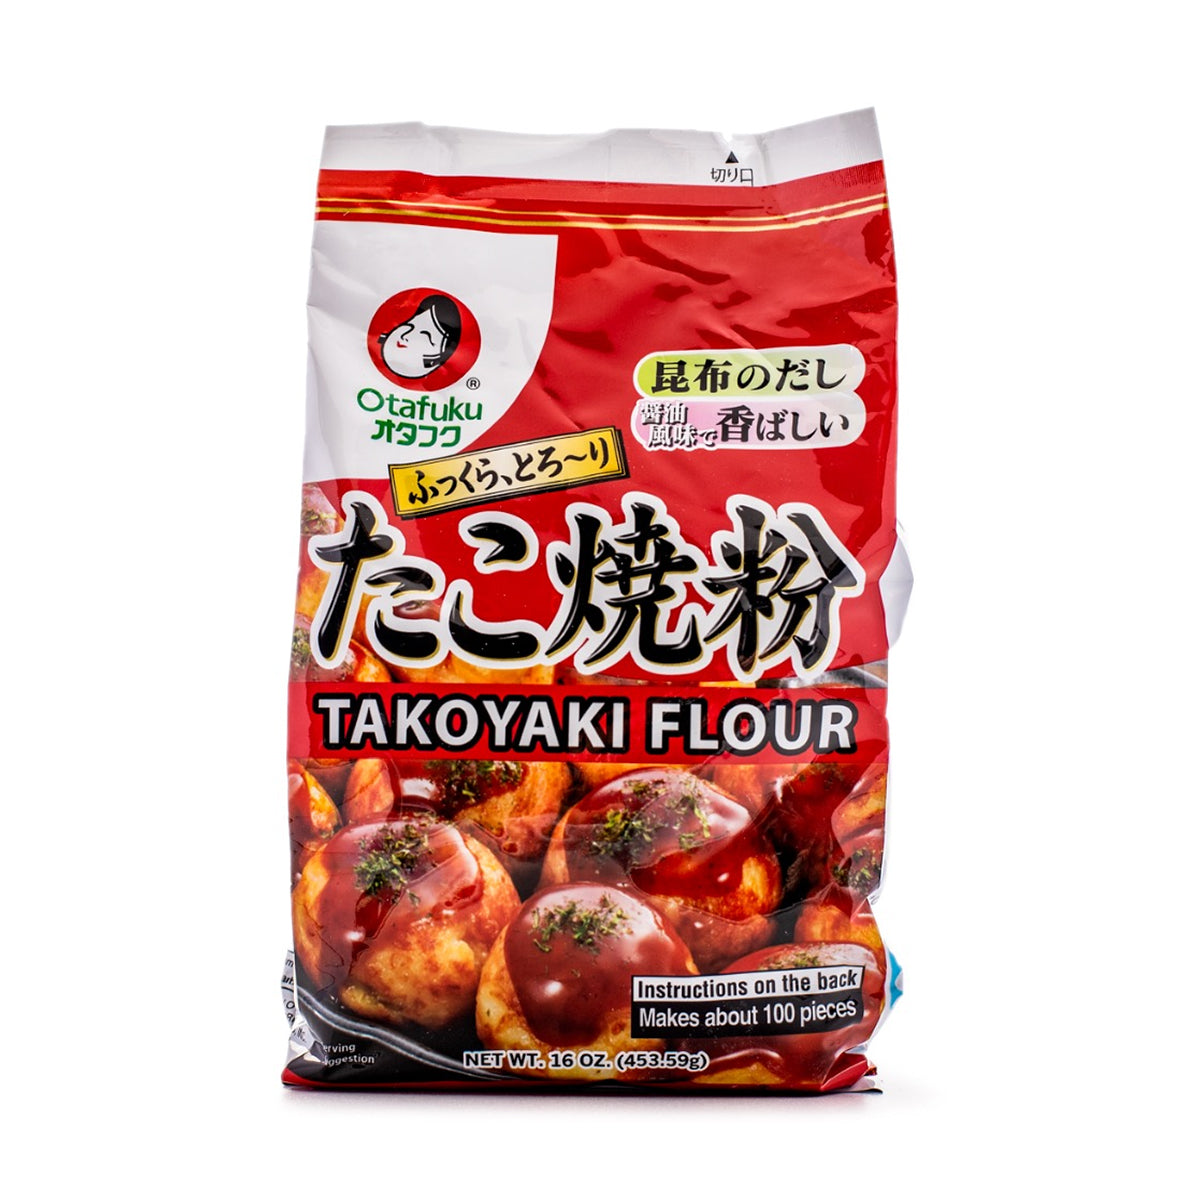 otafuku takoyaki flour - 16oz